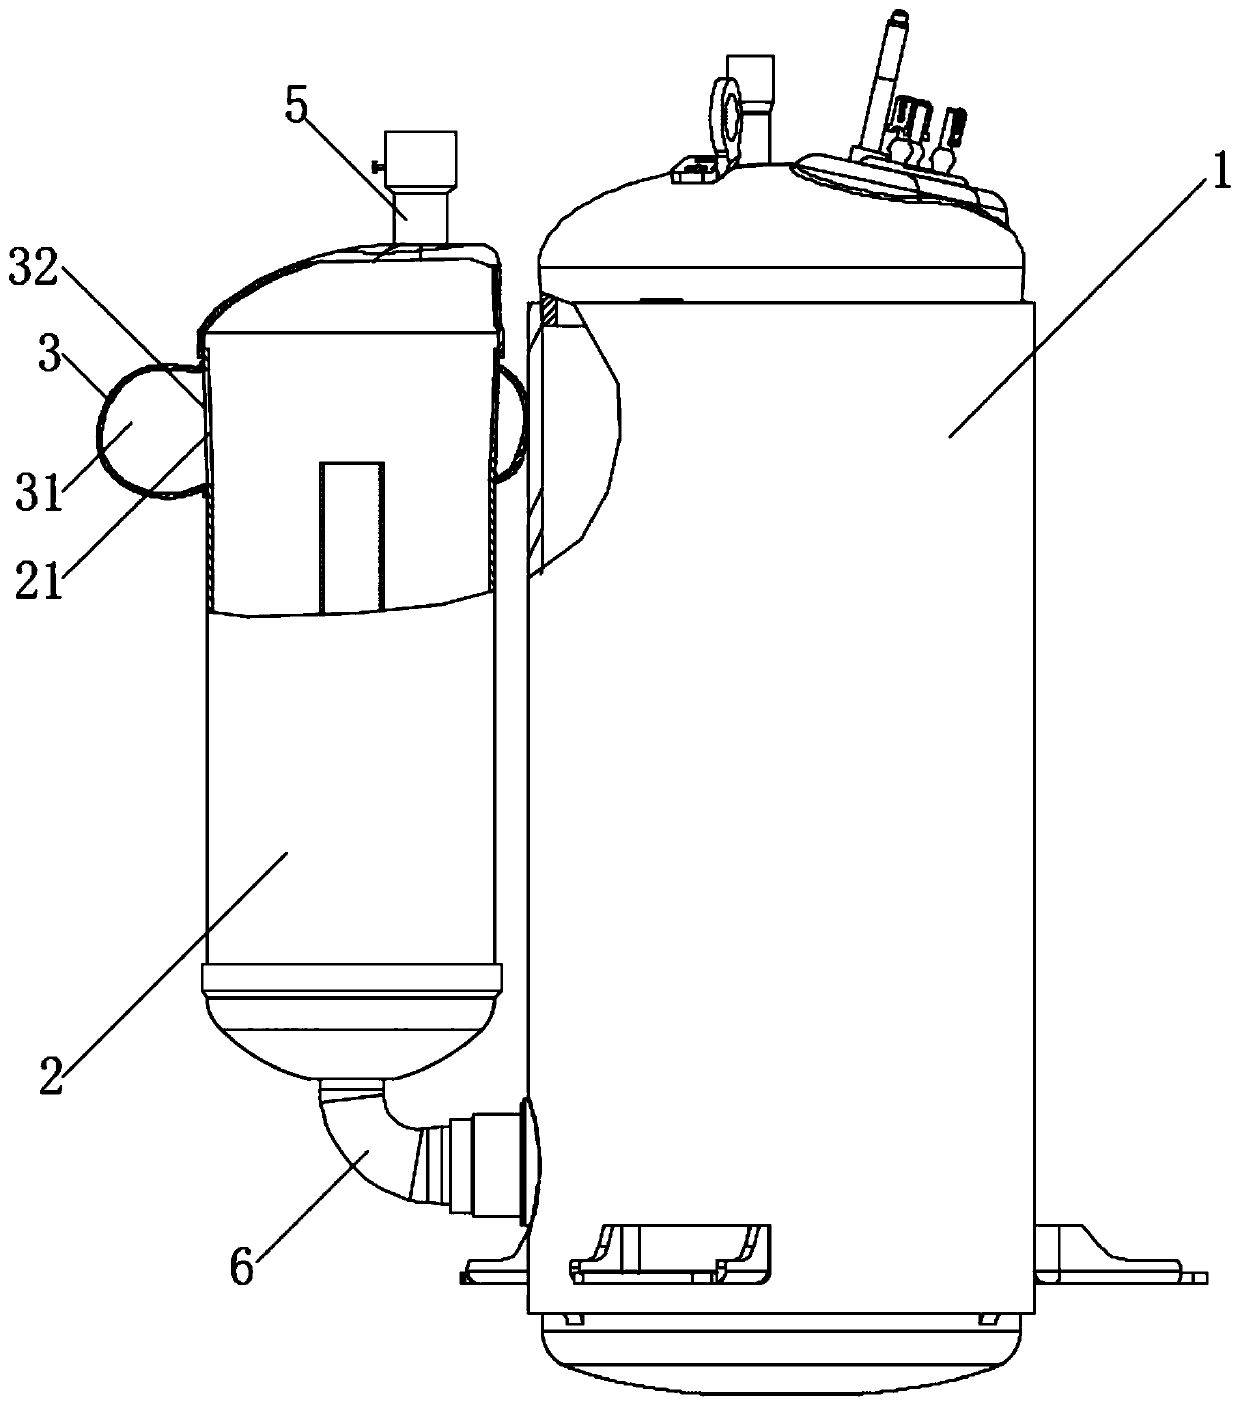 Liquid separator and compressor